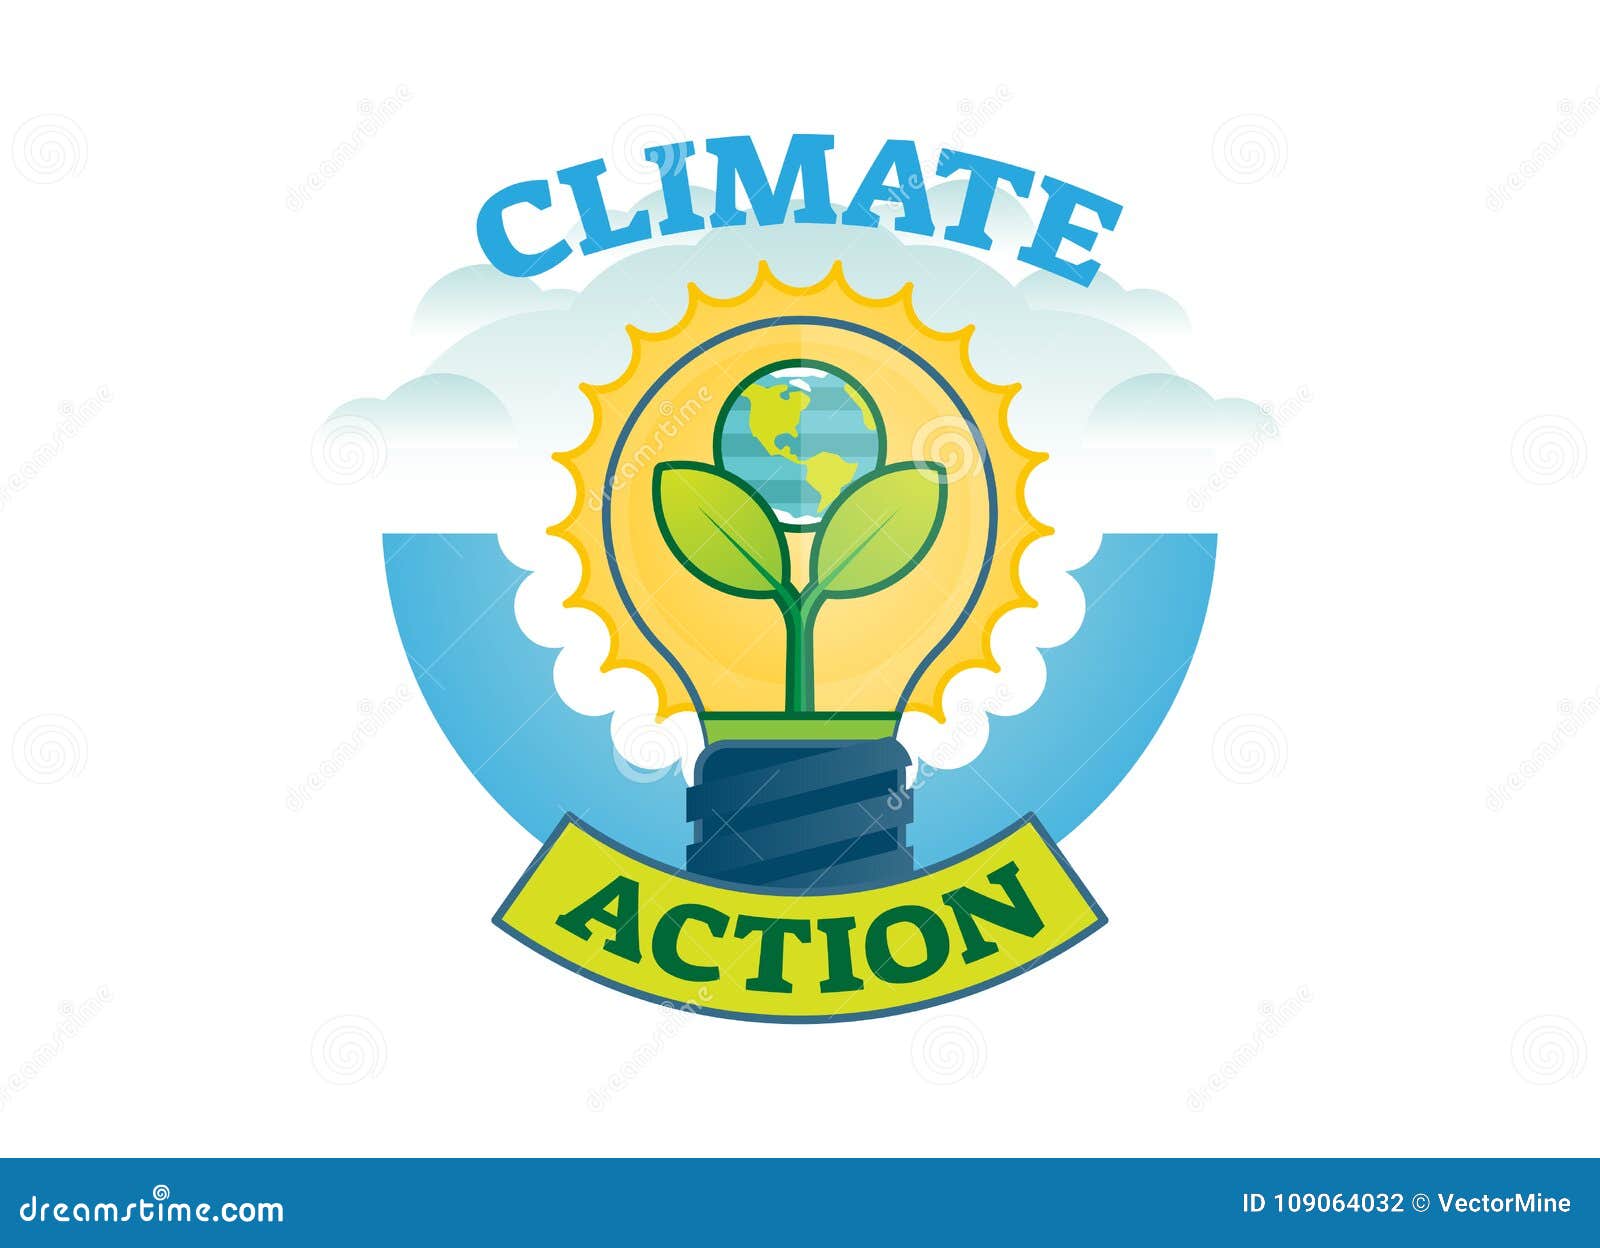 climate action, climate change movement  logo badge